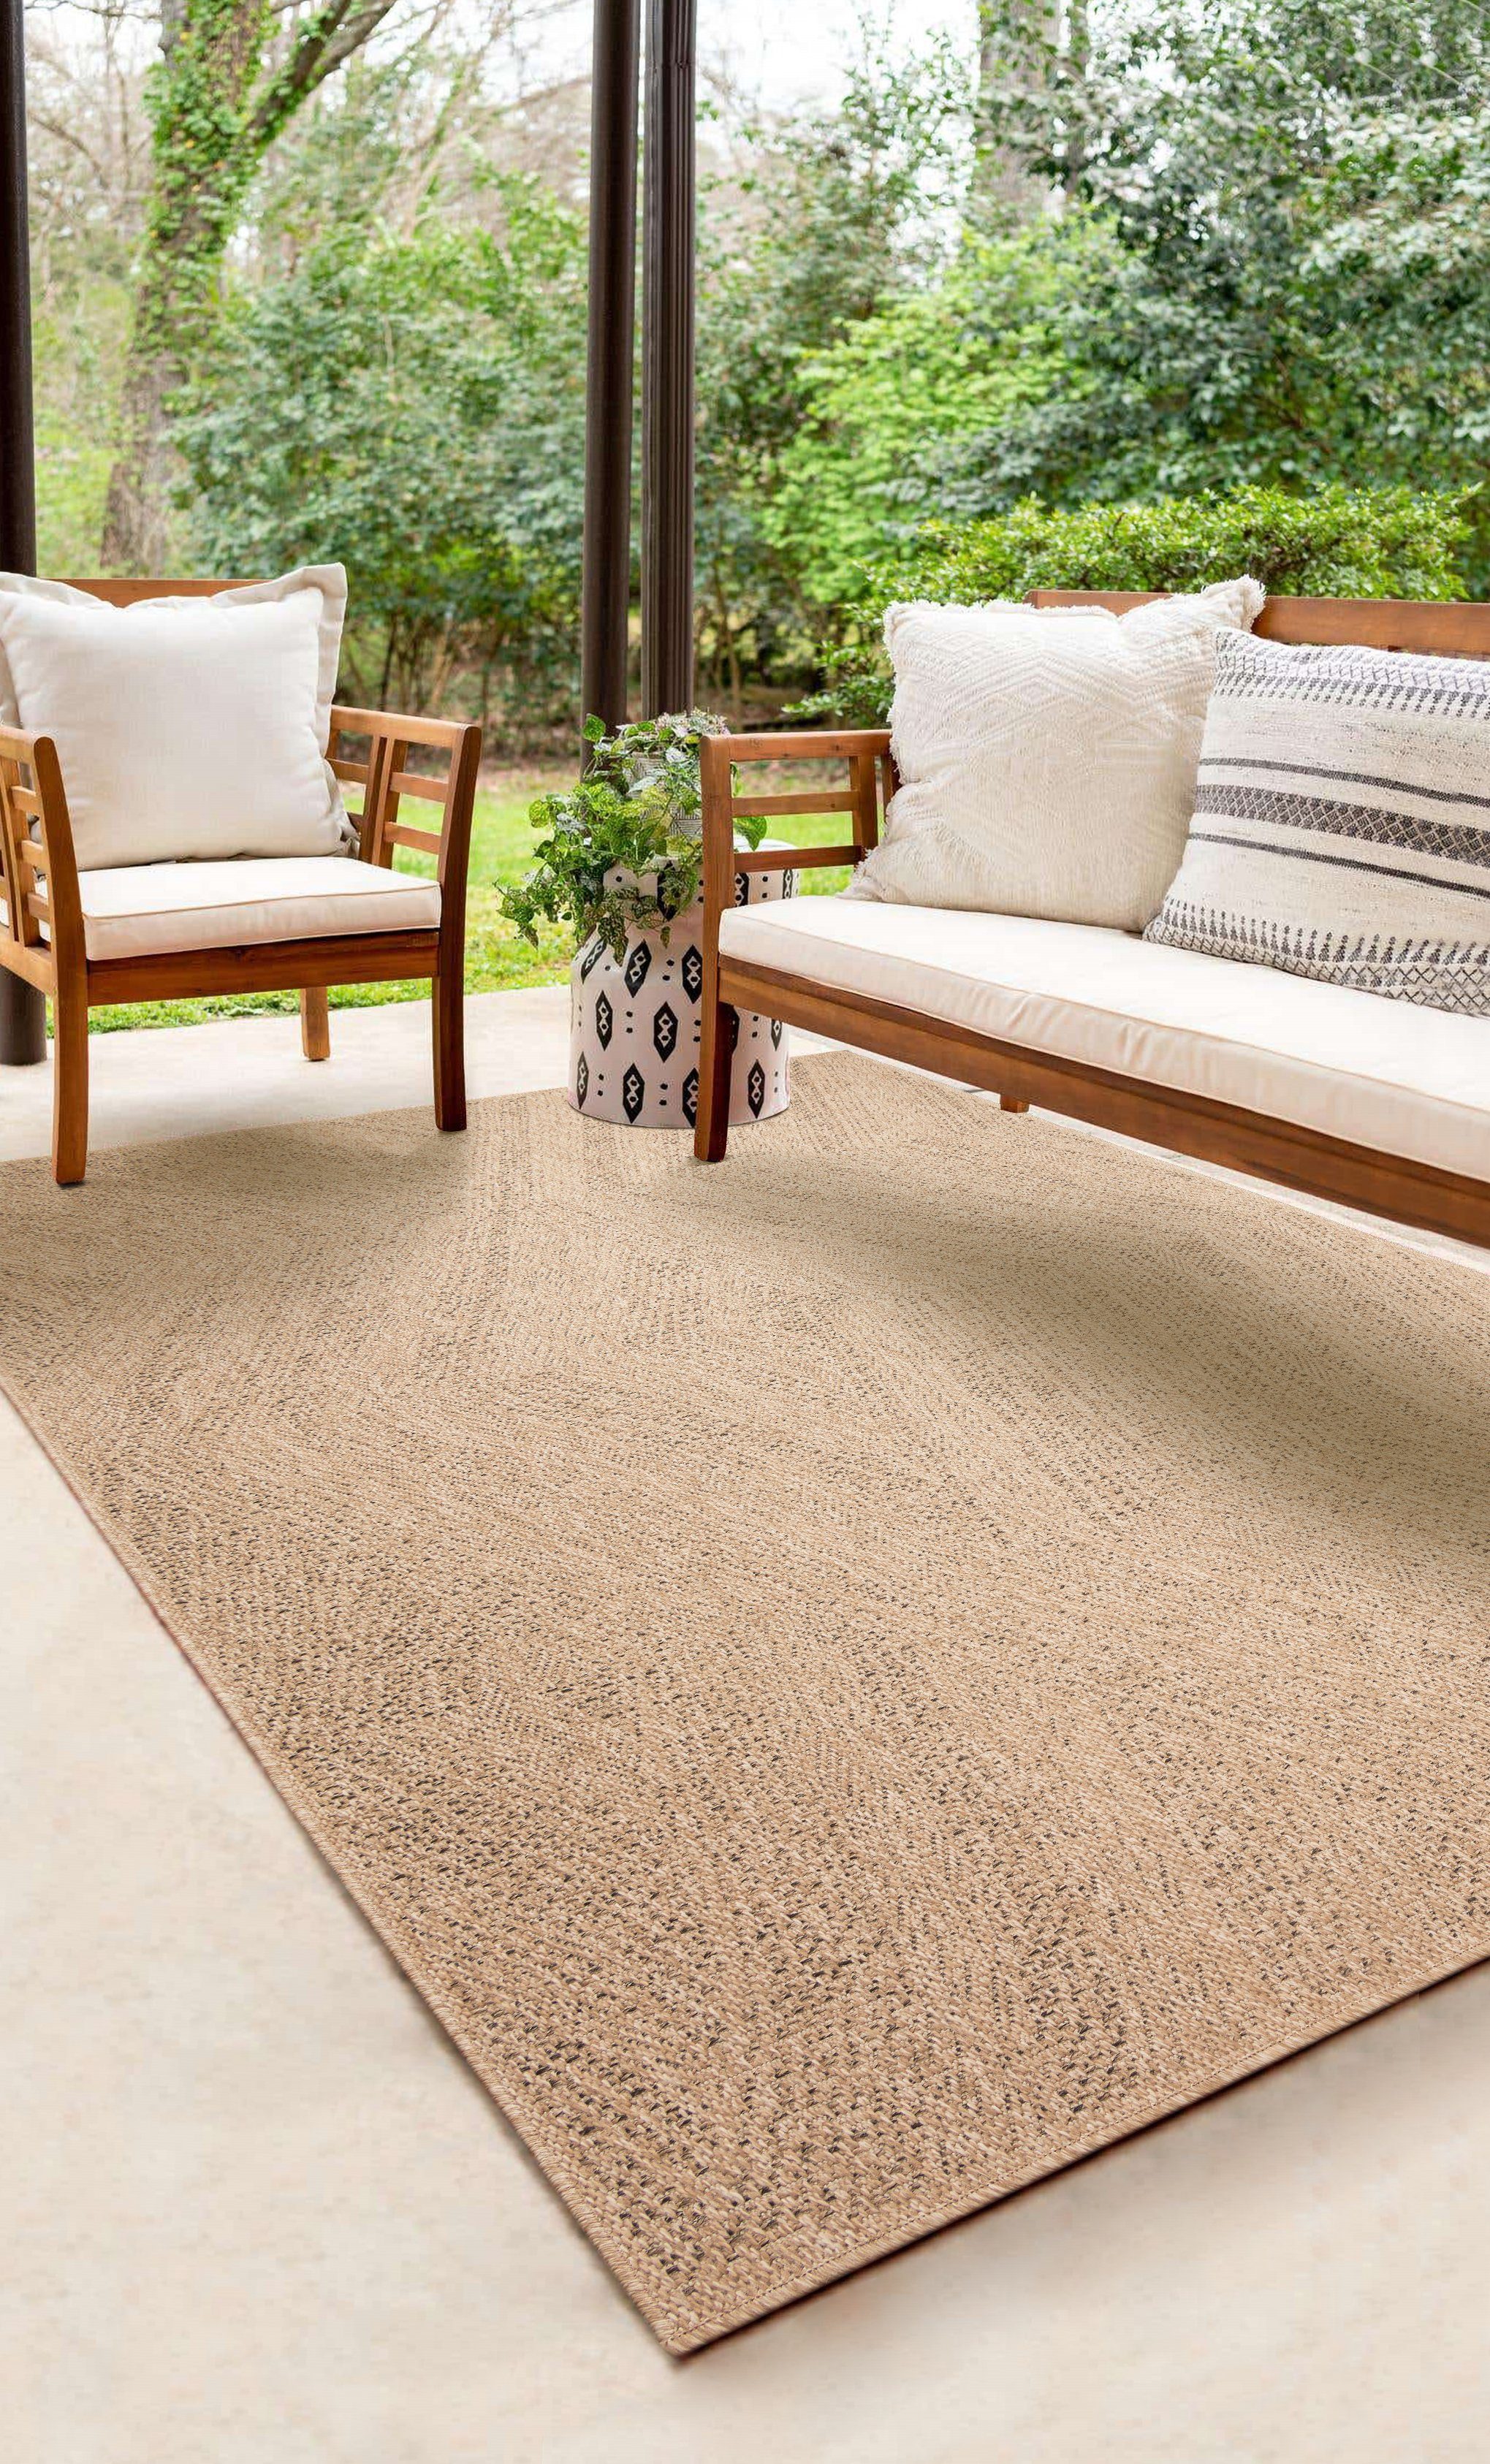 Outdoorteppich the carpet Kansas - robuster In- und Outdoor Teppich, the carpet, Outdoor, Indoor, Balkon, Garten, Terrasse, Jute